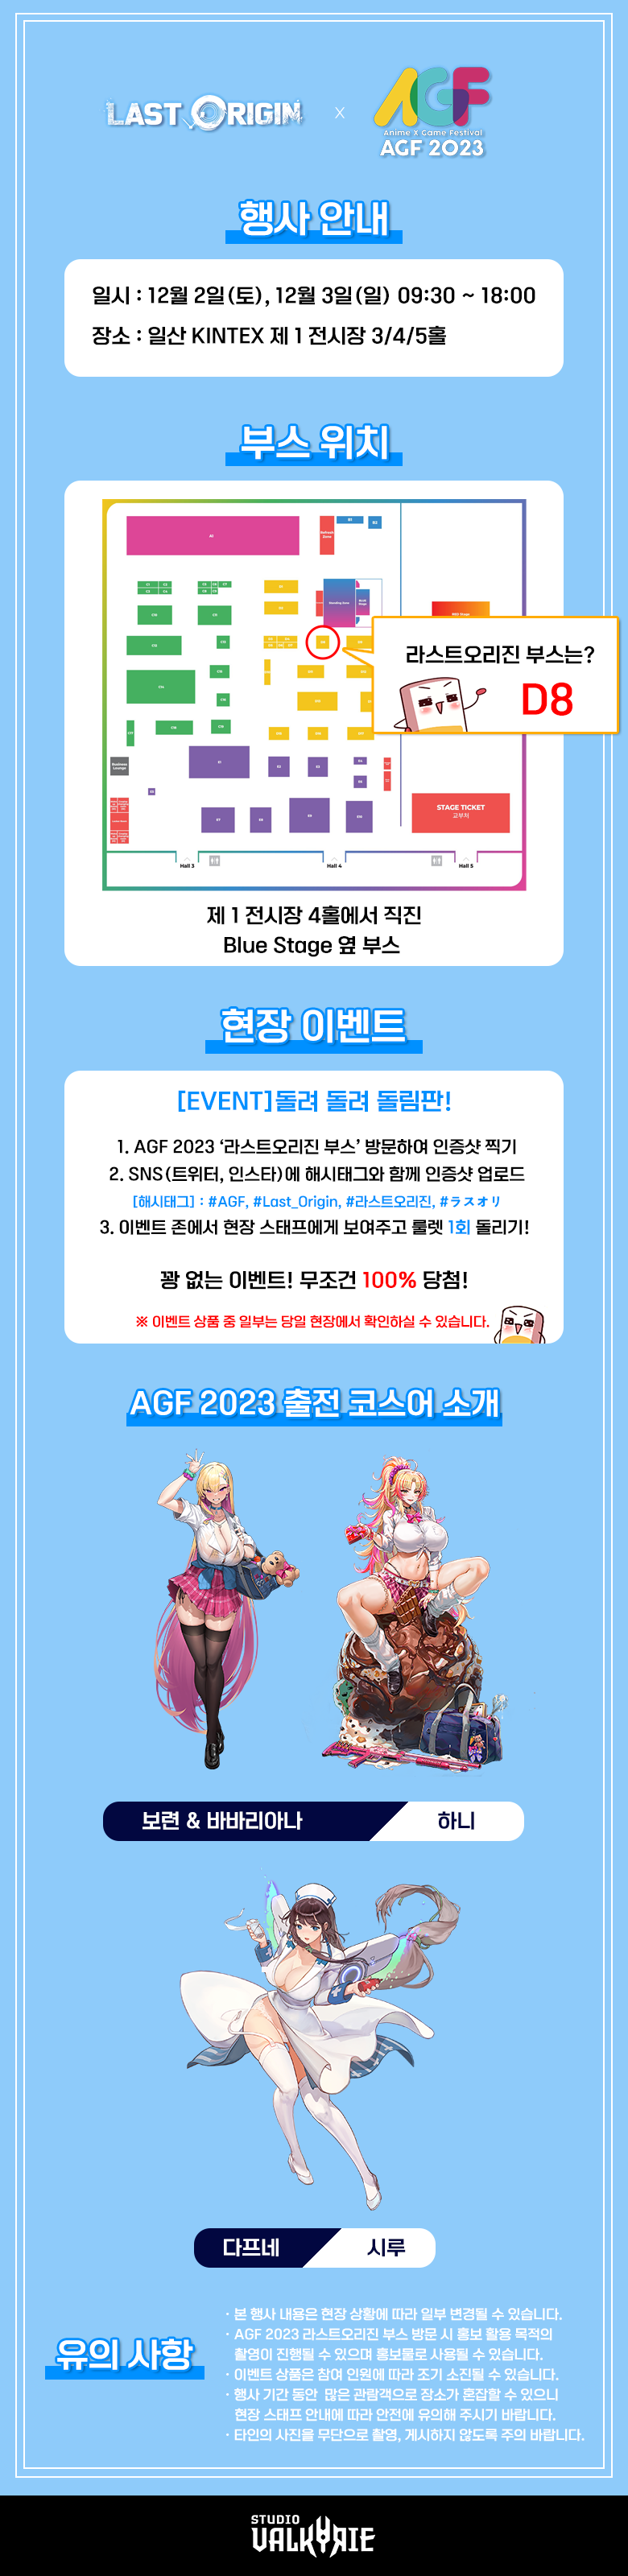 AGF_행사_소개_포스터.png